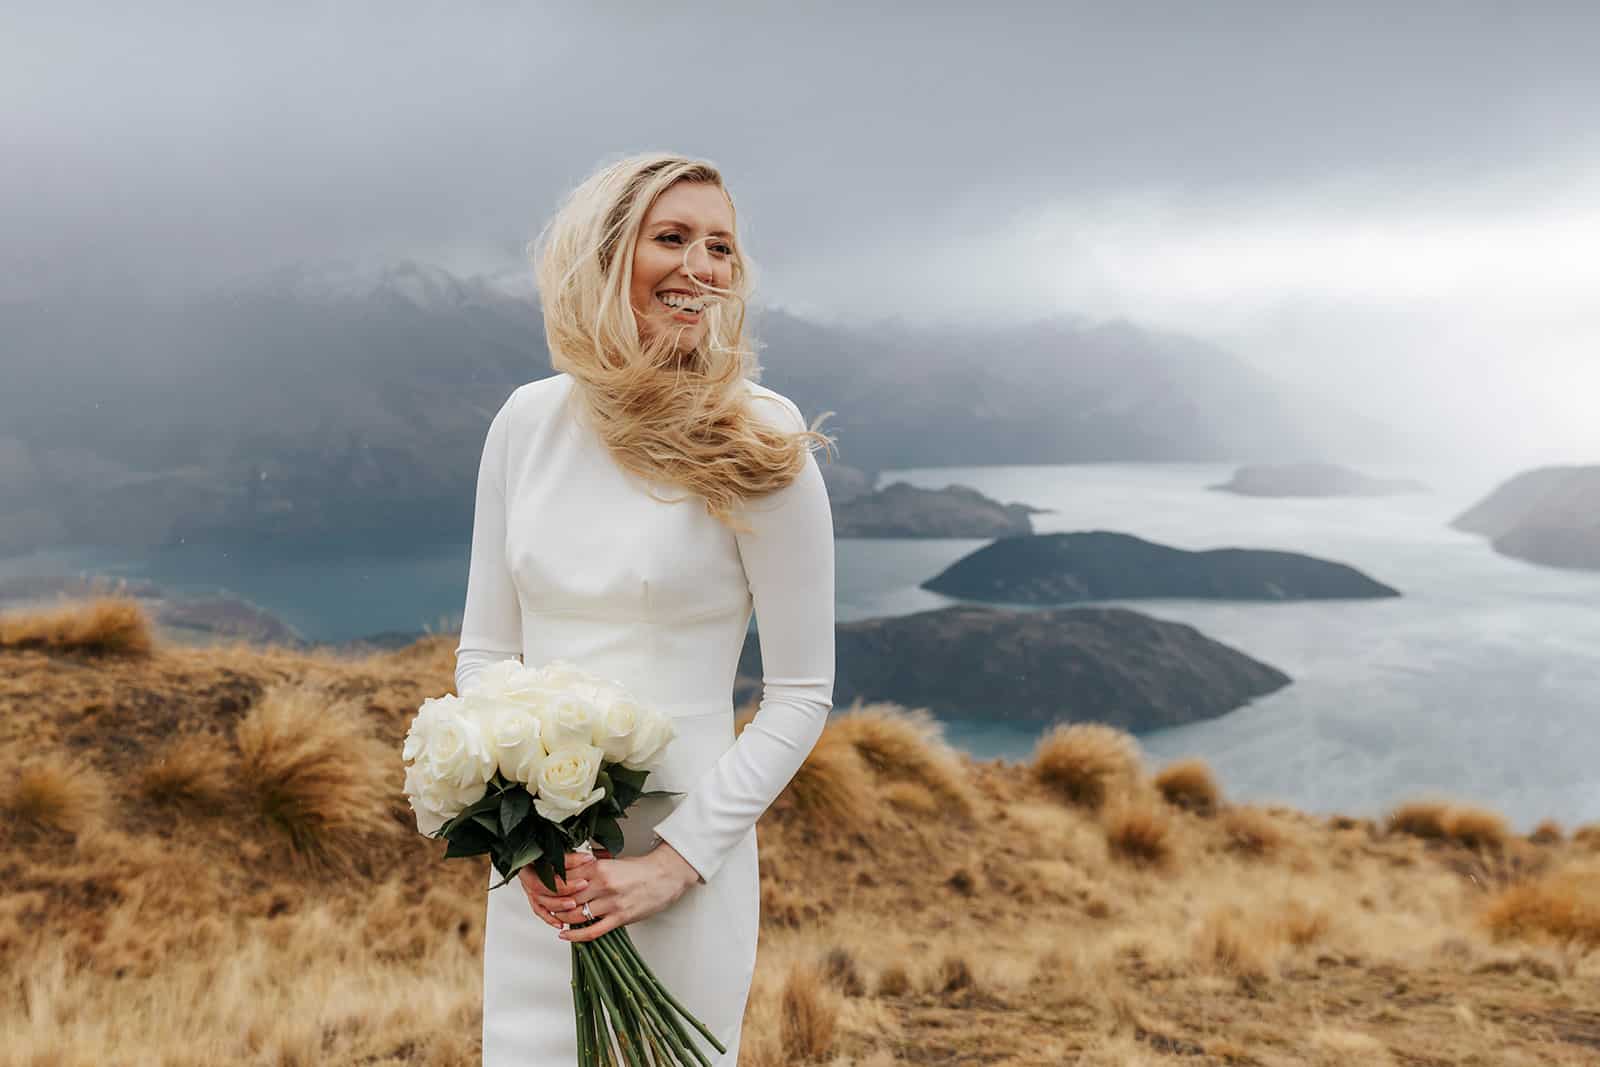 Heli Wedding in Wanaka on Coromandel Peak New Zealand on a rainy day